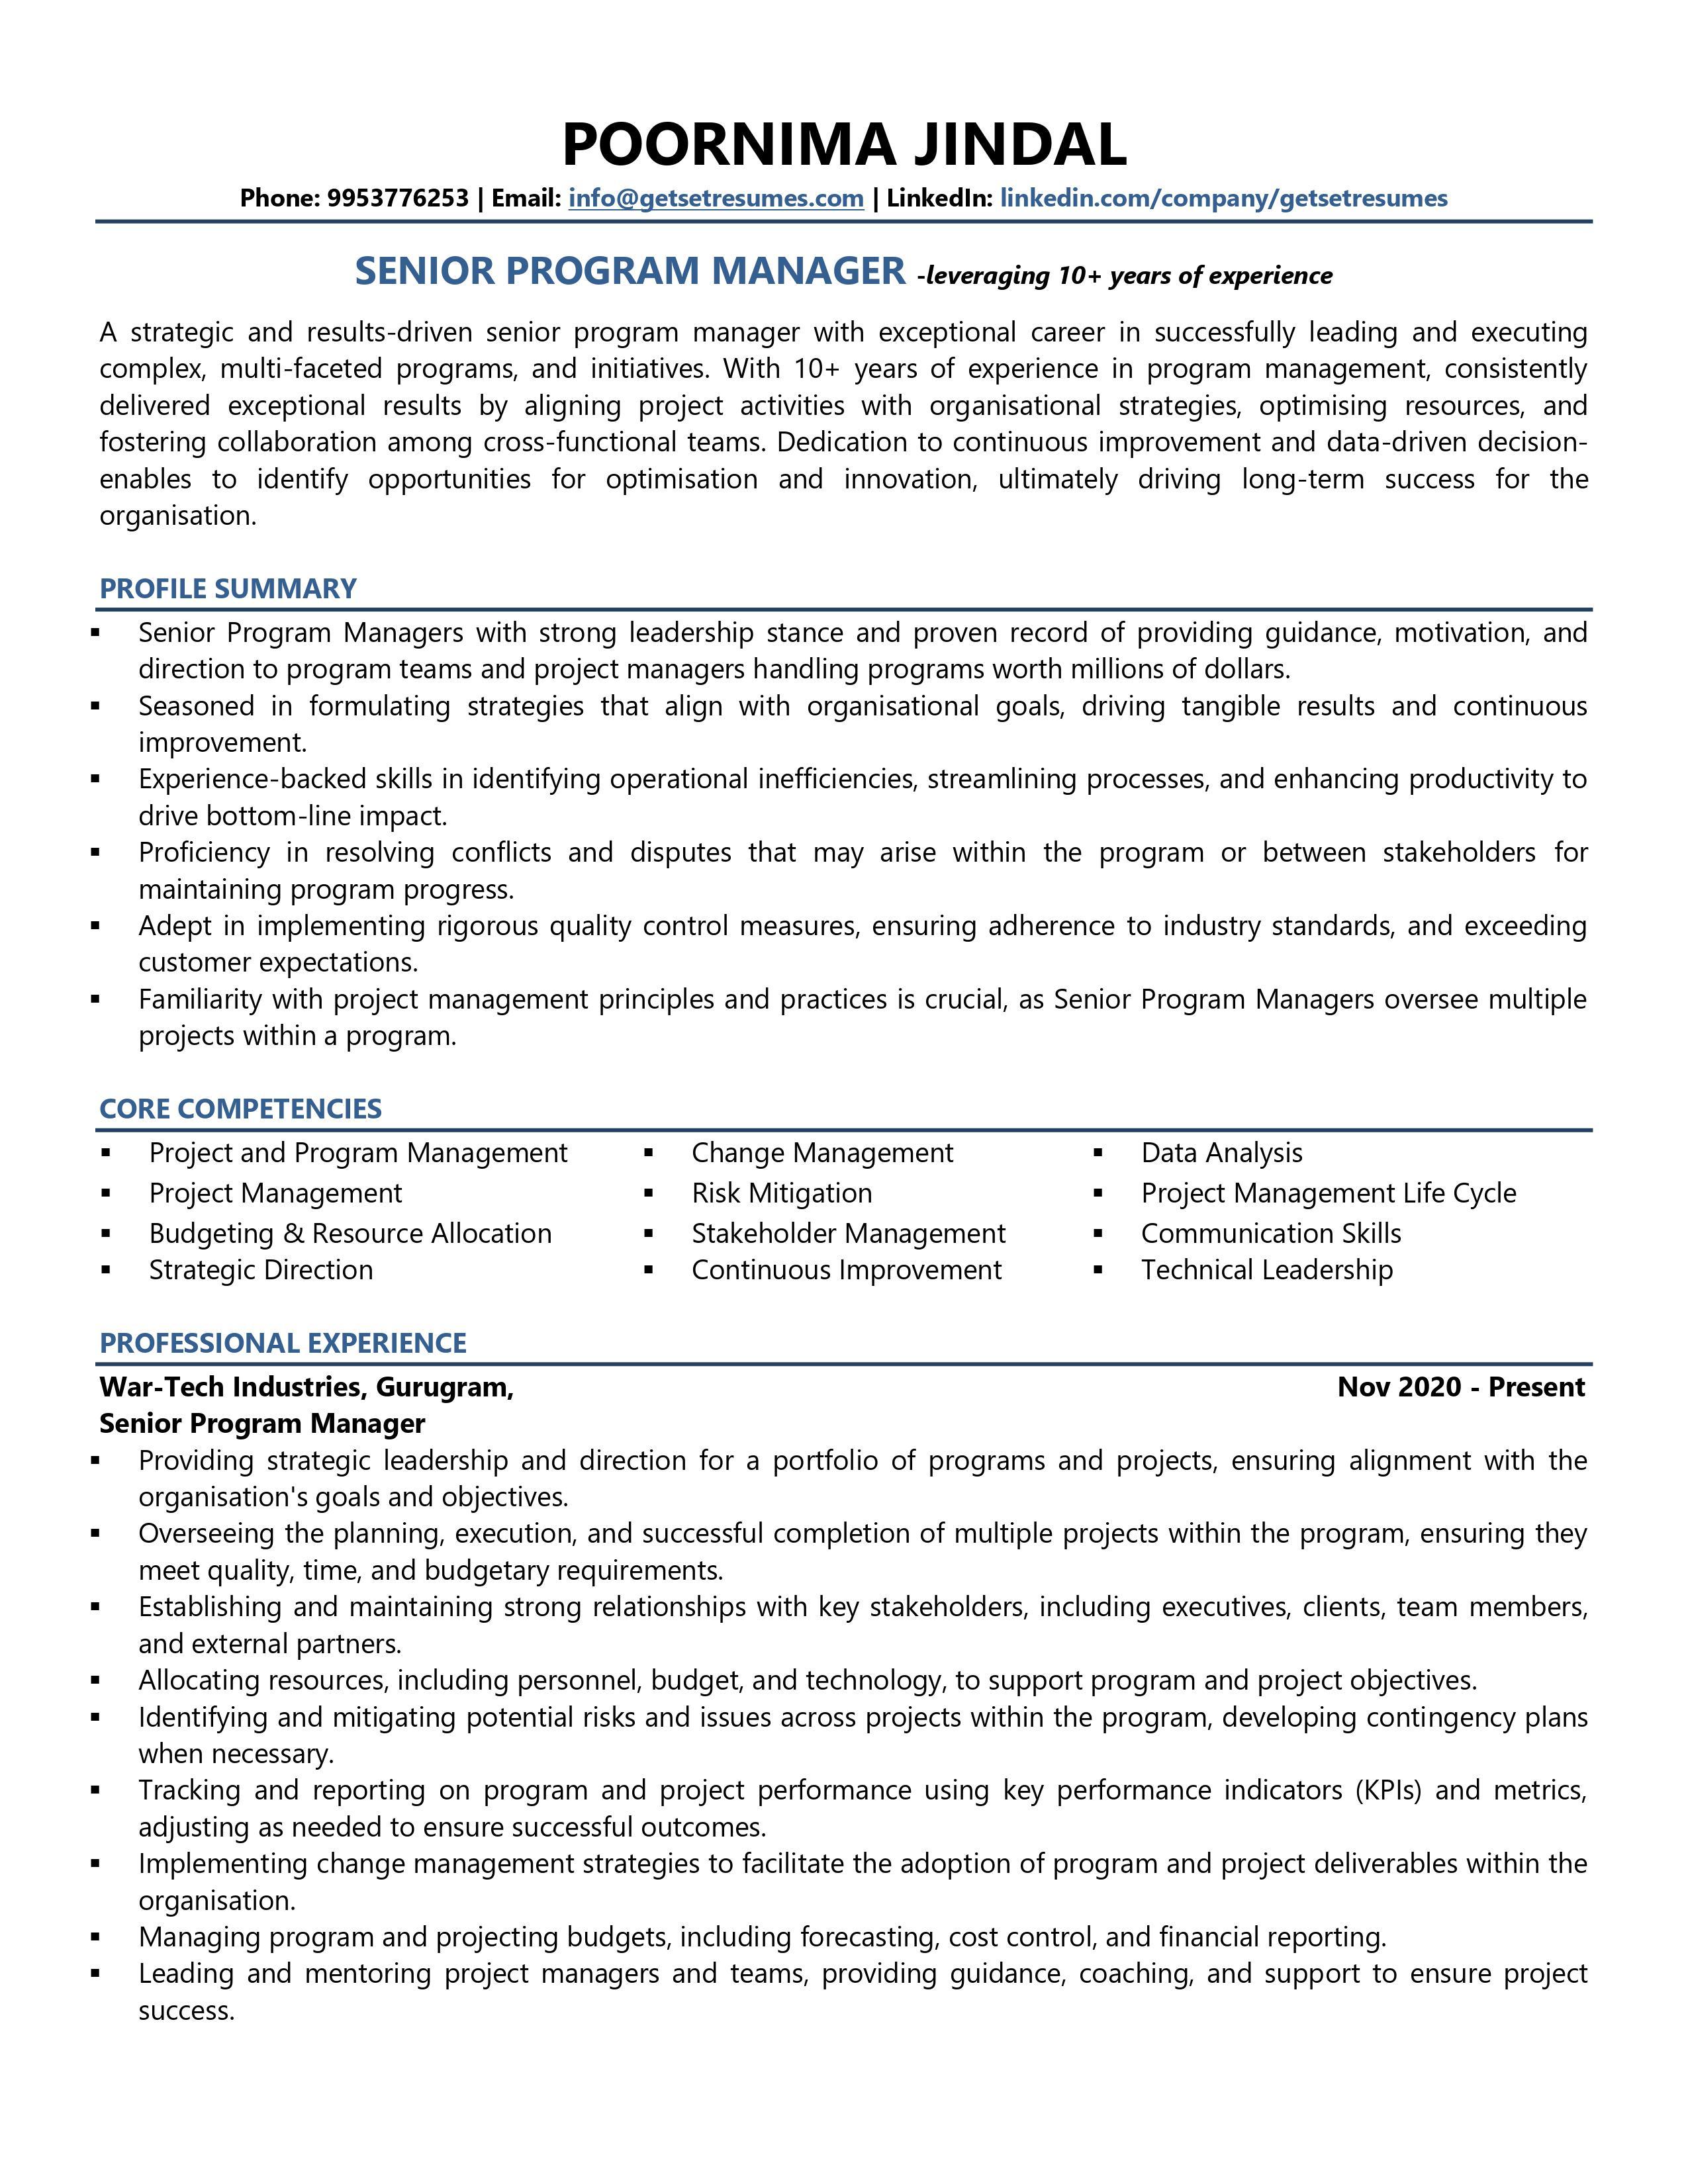 Senior Program Manager - Resume Example & Template